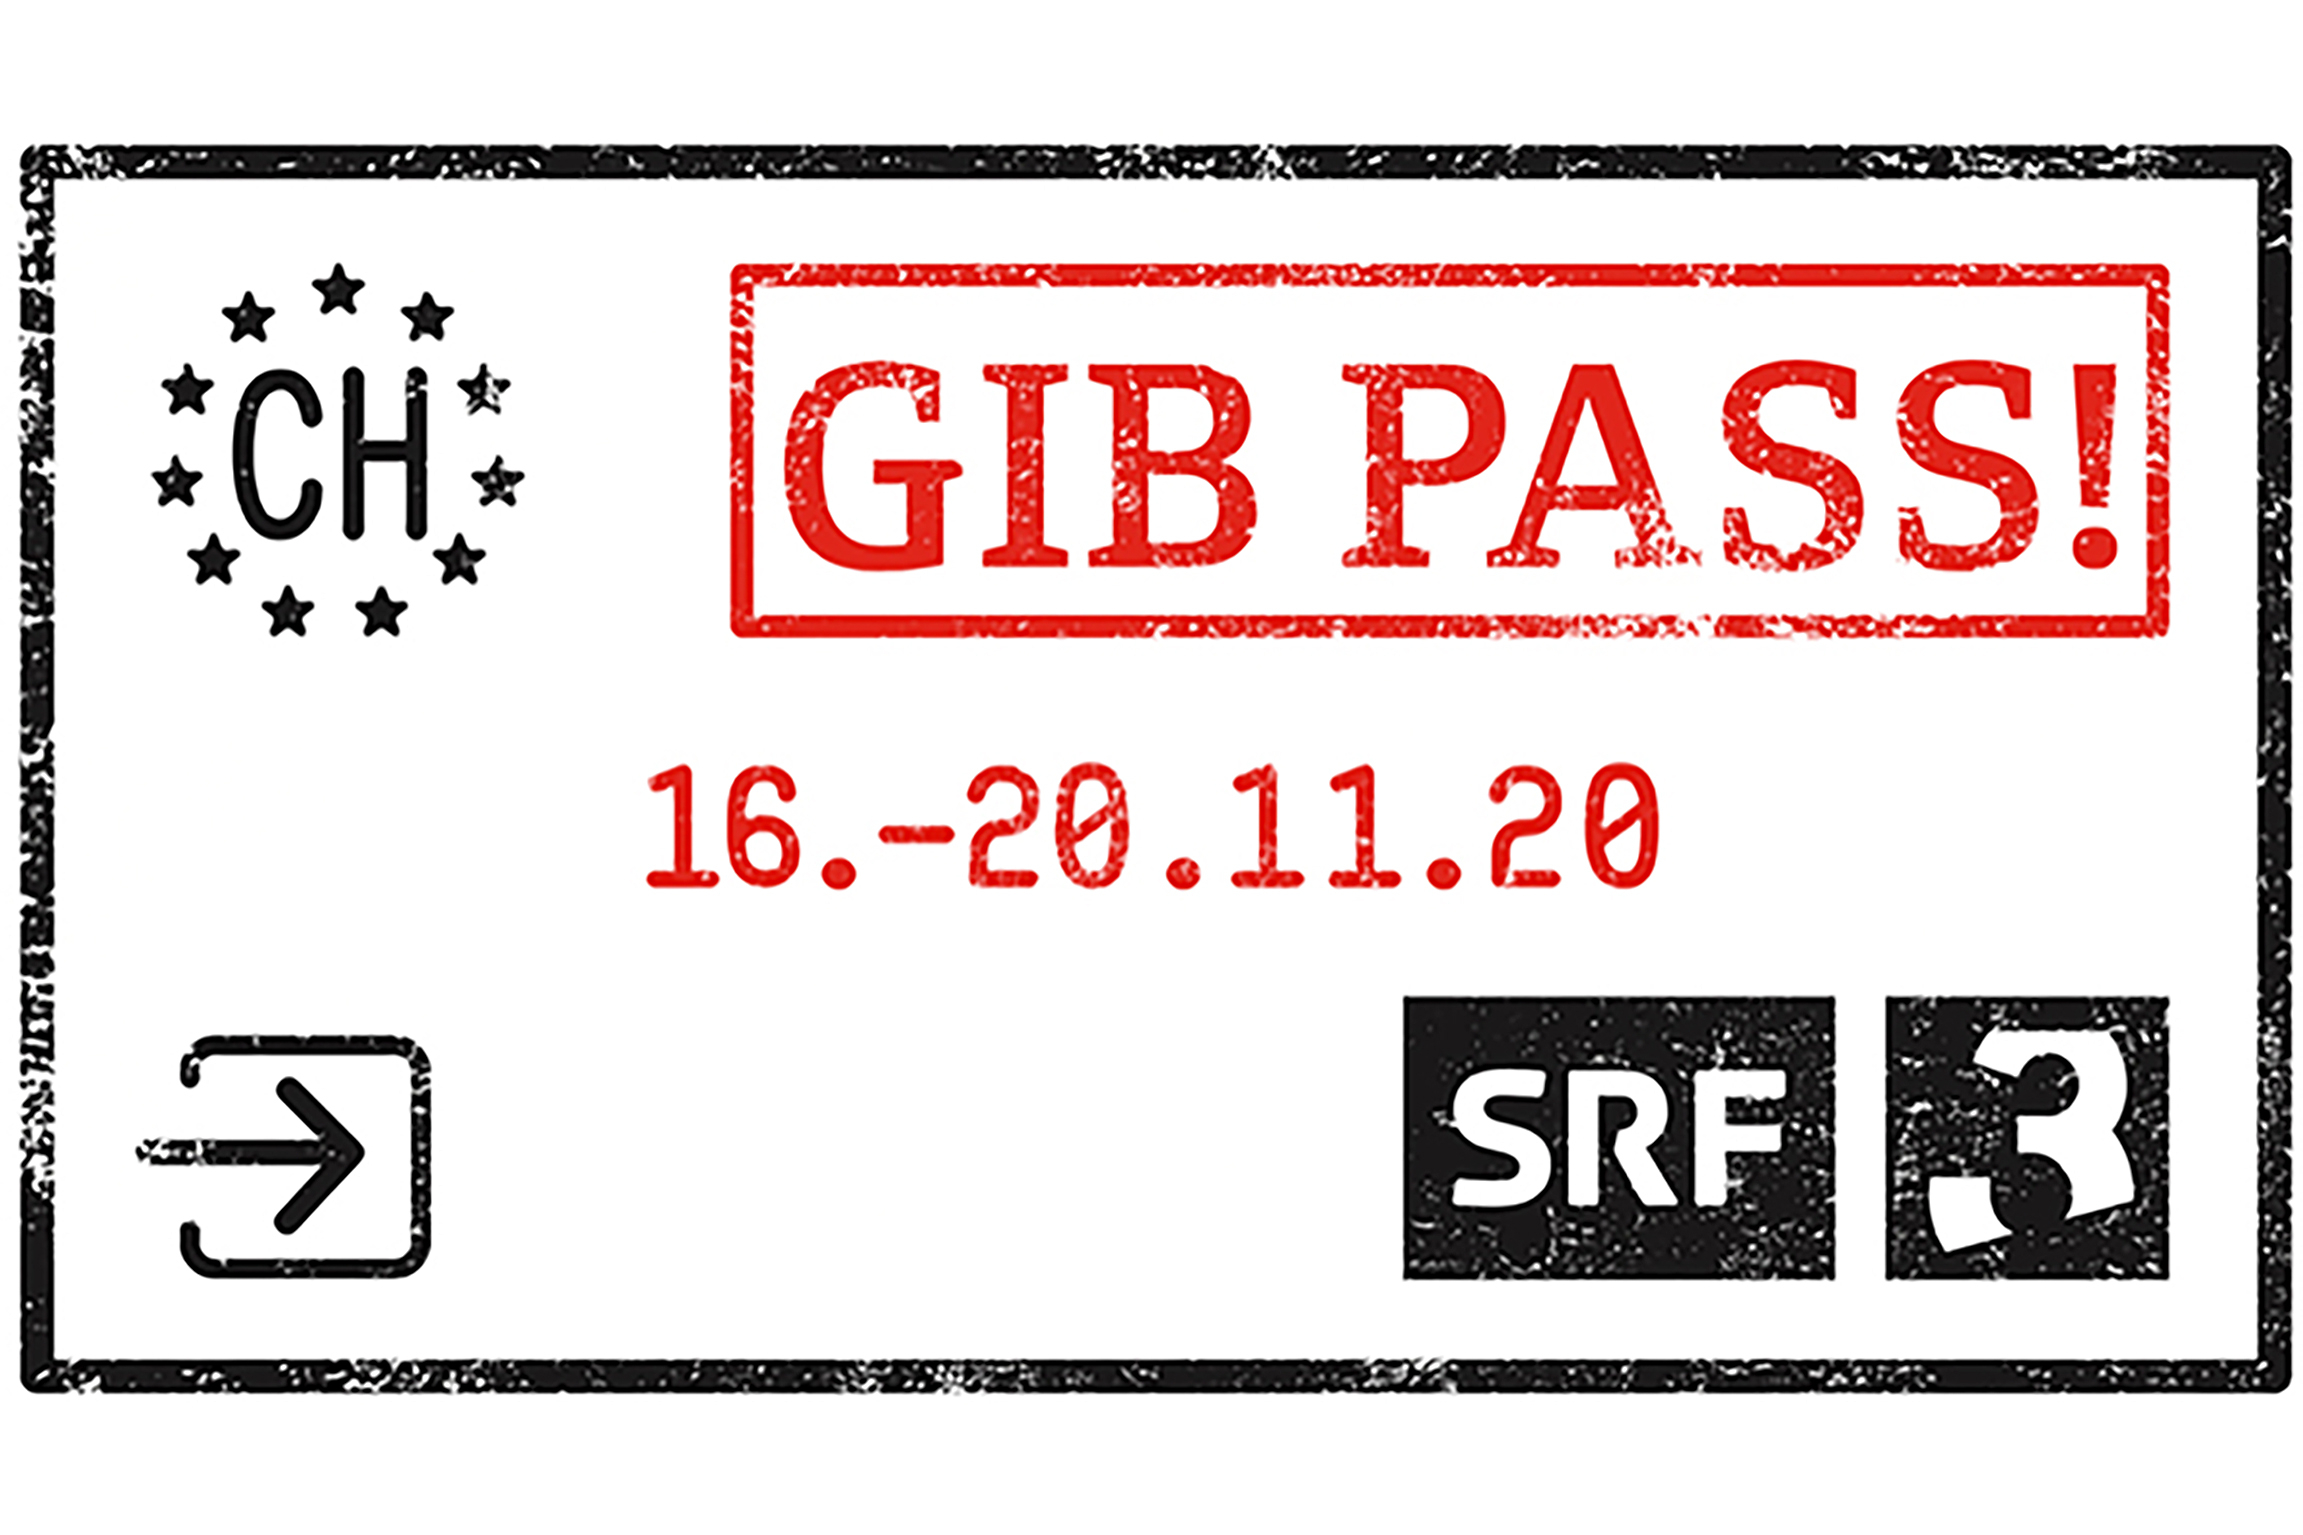 Gib Pass  ̶  Rika Brunes schwieriger Weg zum Schweizer Pass Keyvisual 2020 